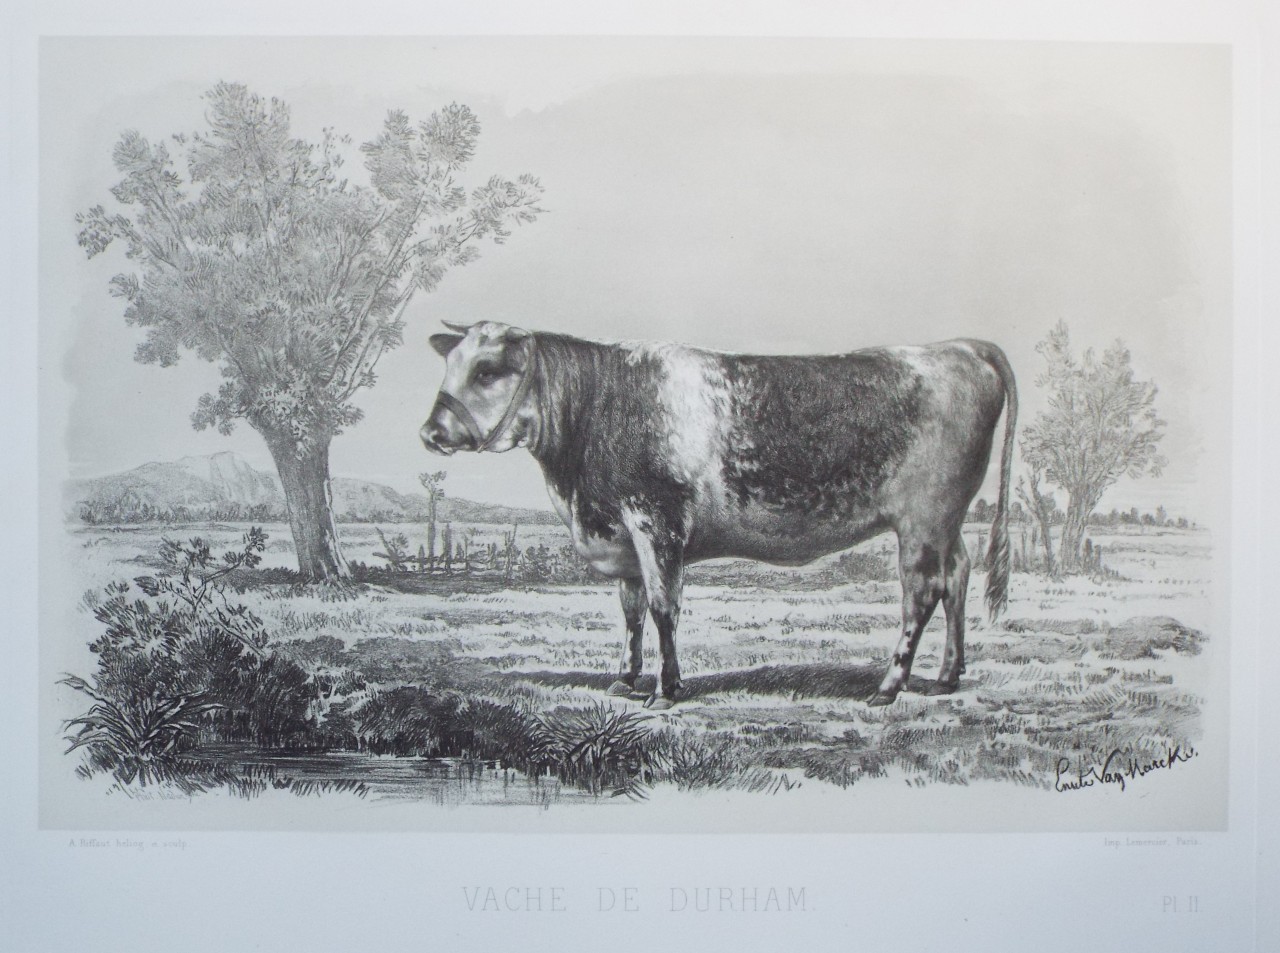 Heliogravure - Vache de Durham. - Riffaut